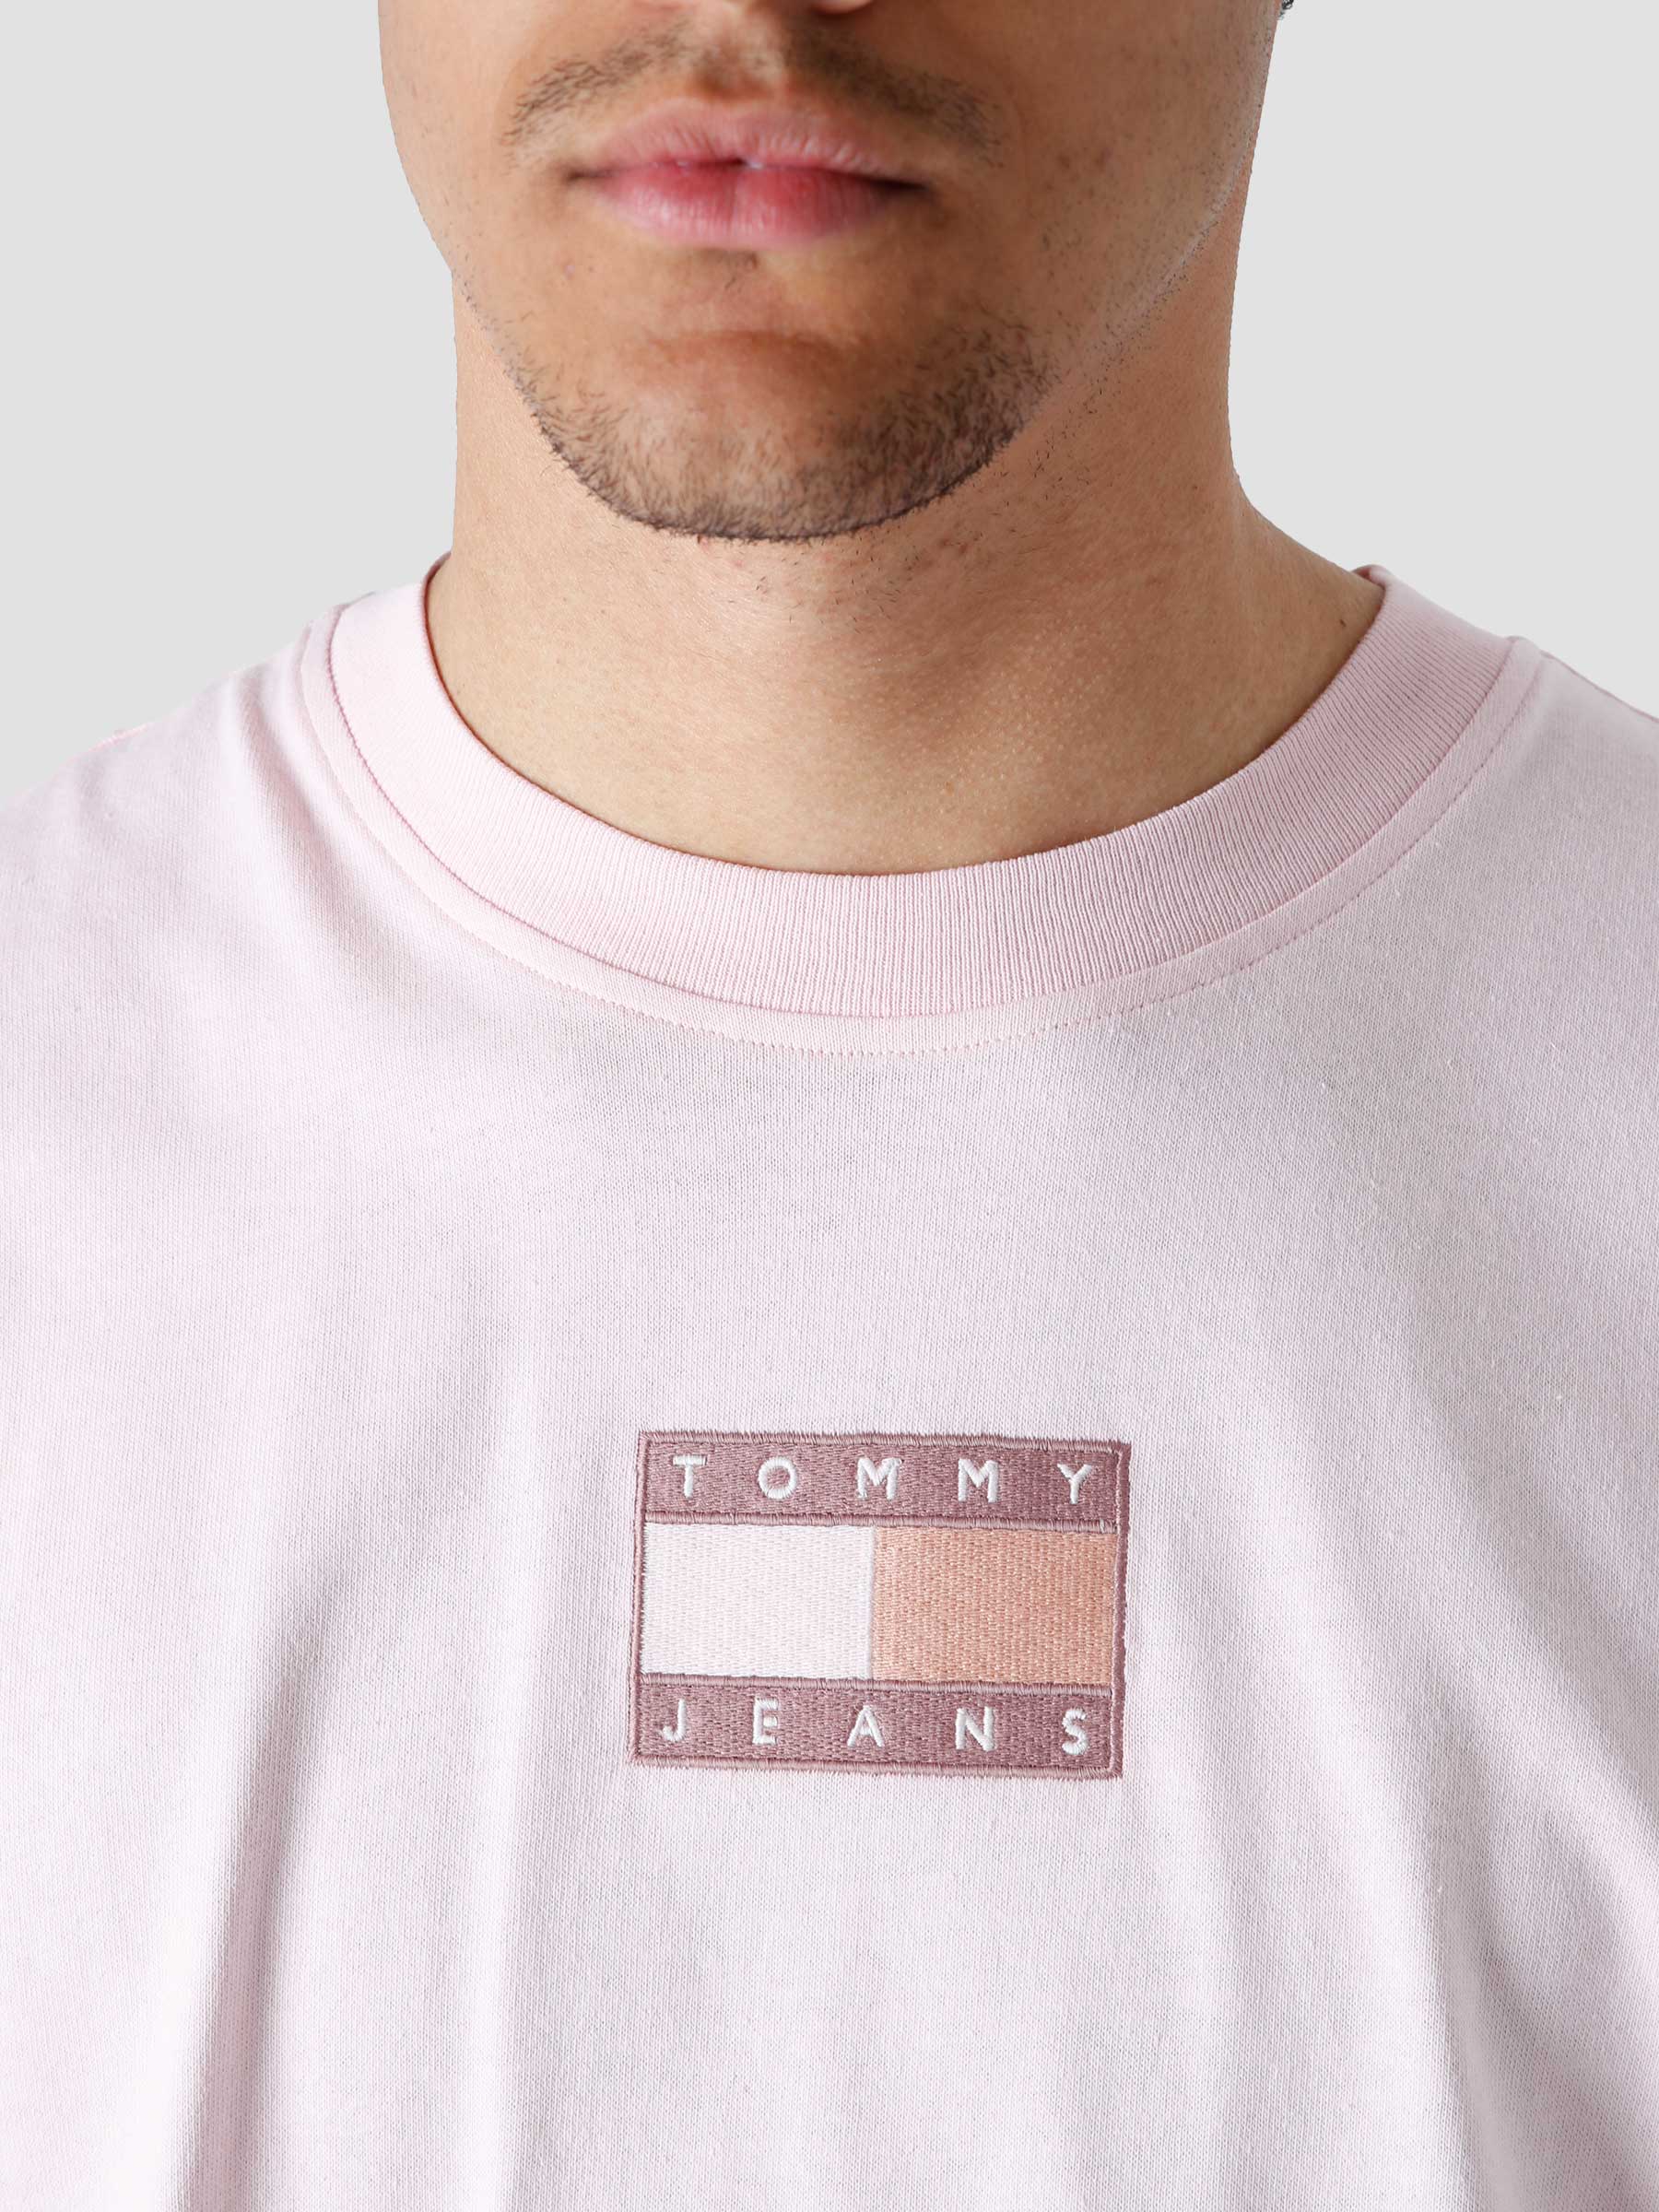 Freshcotton Best T-Shirt Jeans - Broadway TJM Tommy Graphic Pink